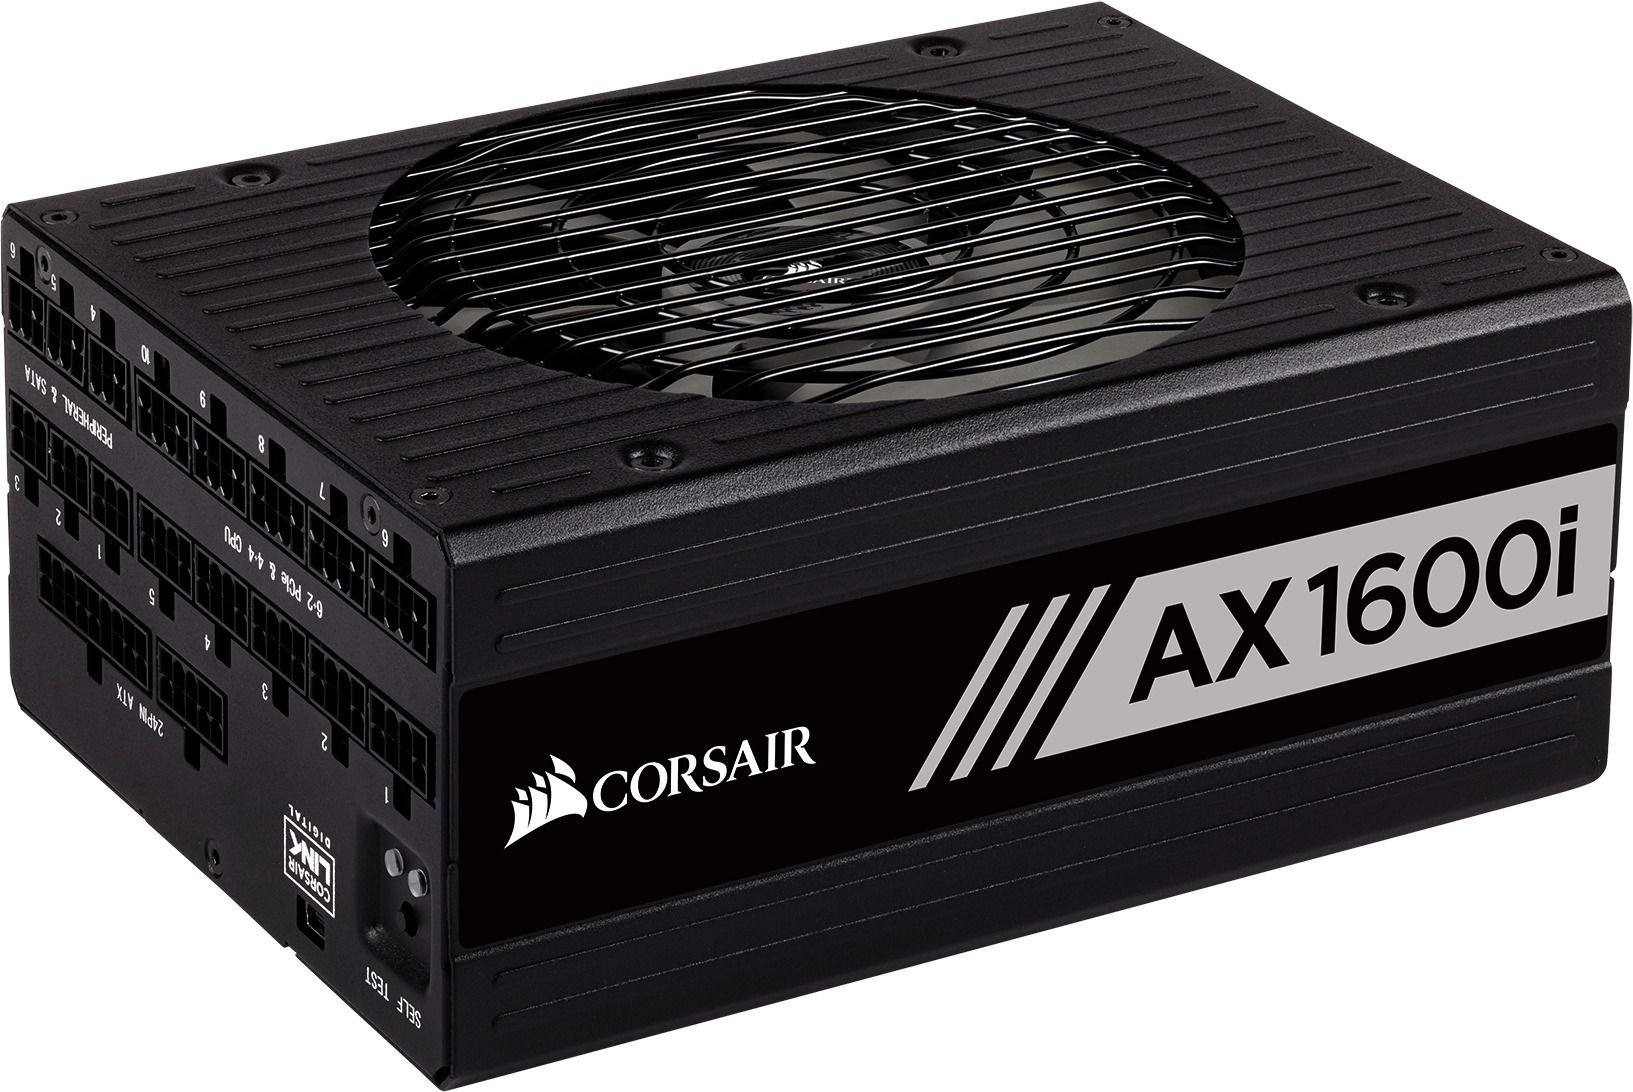 CORSAIR AX1600i Digital ATX Power Supply EU version